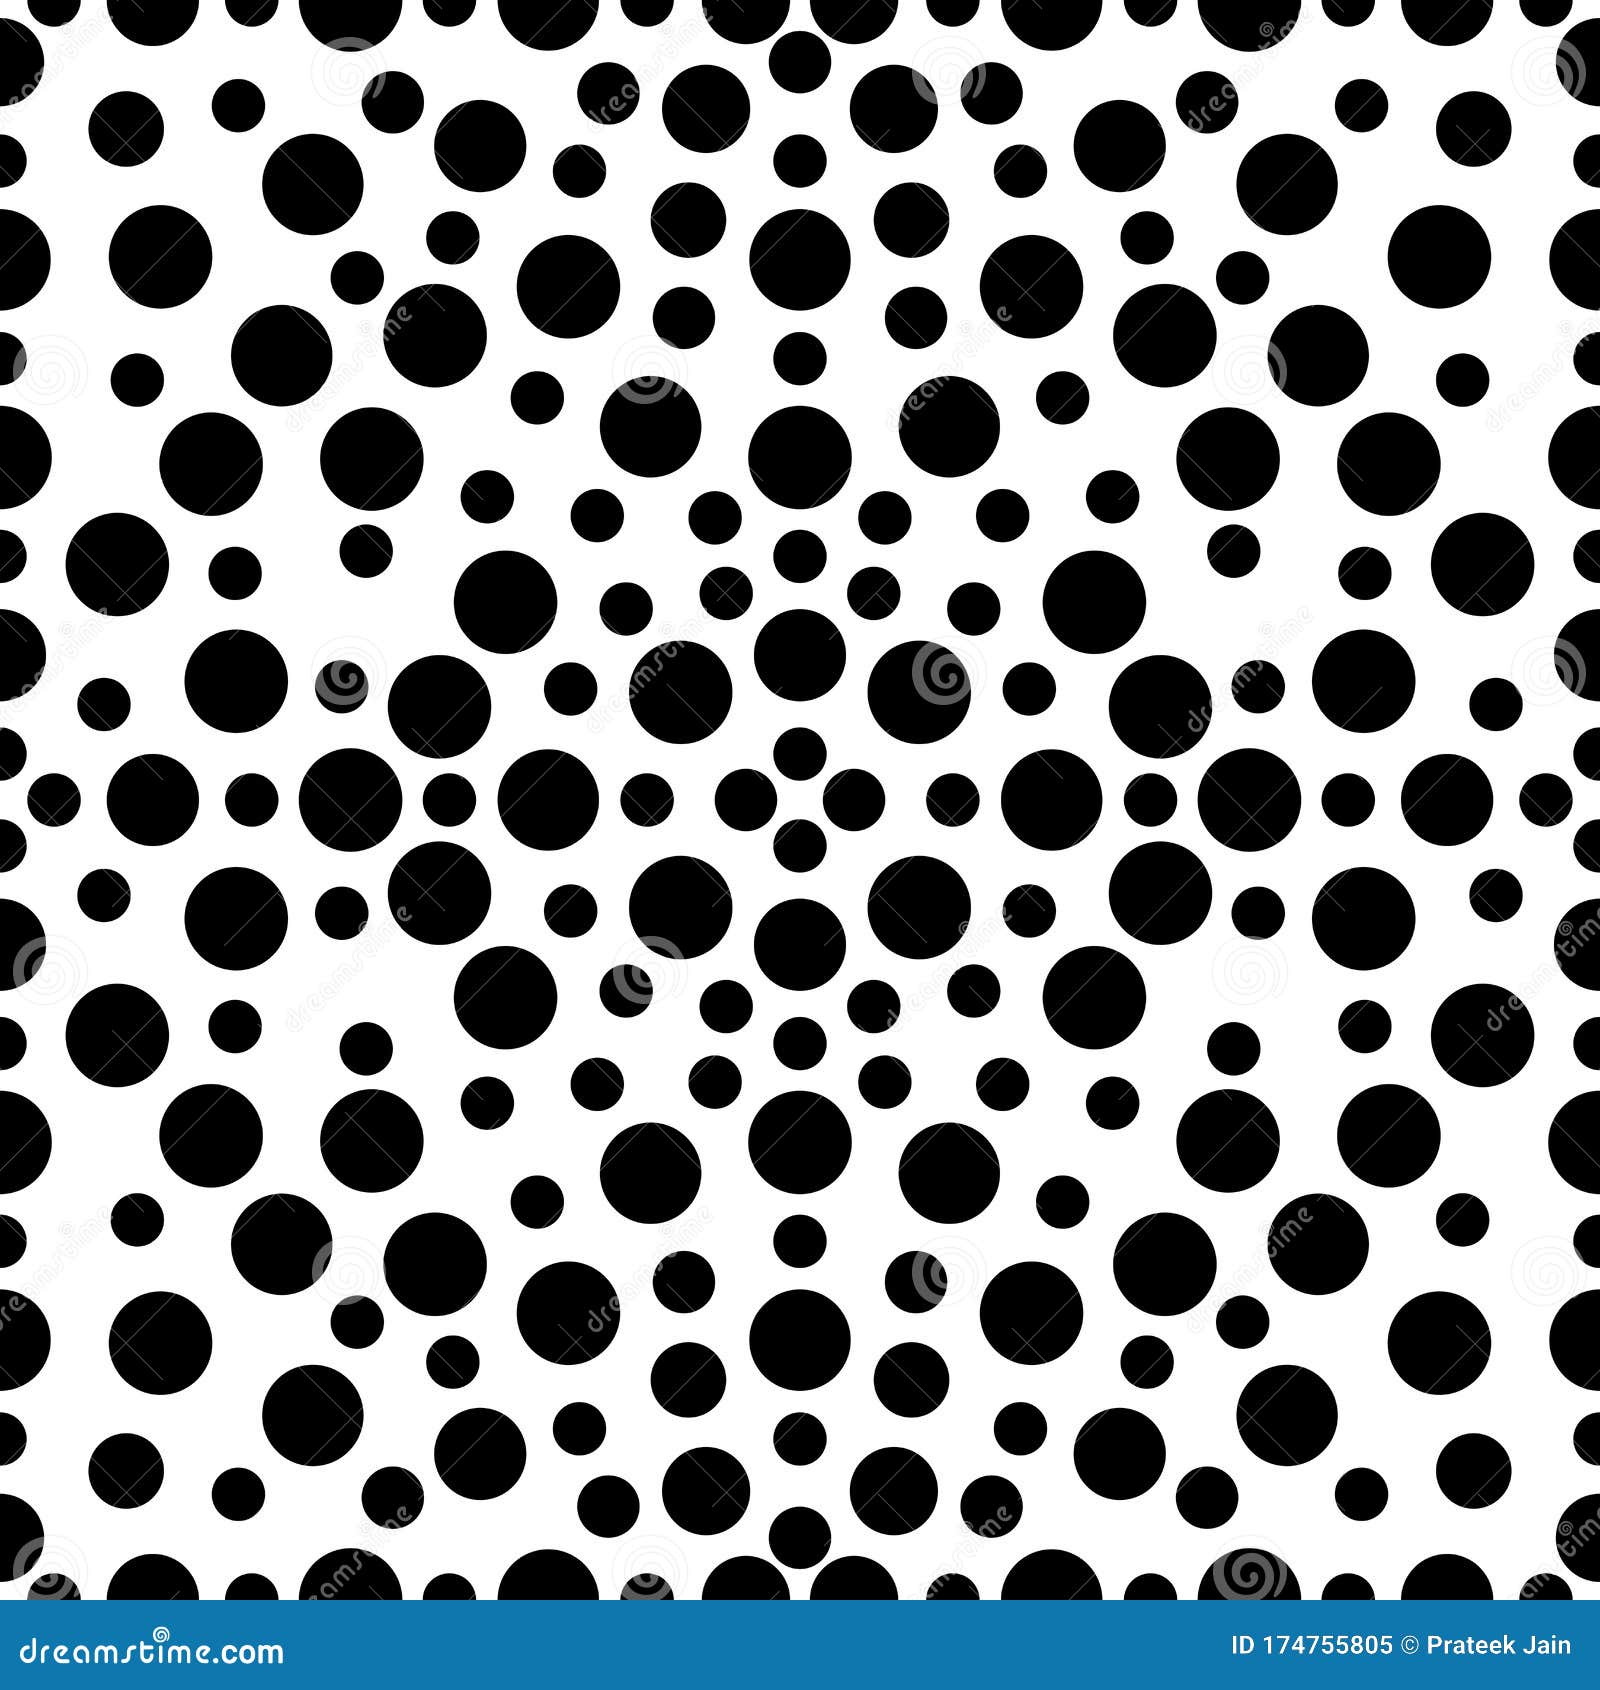 Black Polka Dots, White Background, Seamless Background Black Polka Dots on  White Seamless  Dots Background. Stock Illustration -  Illustration of circle, fabrics: 174755805